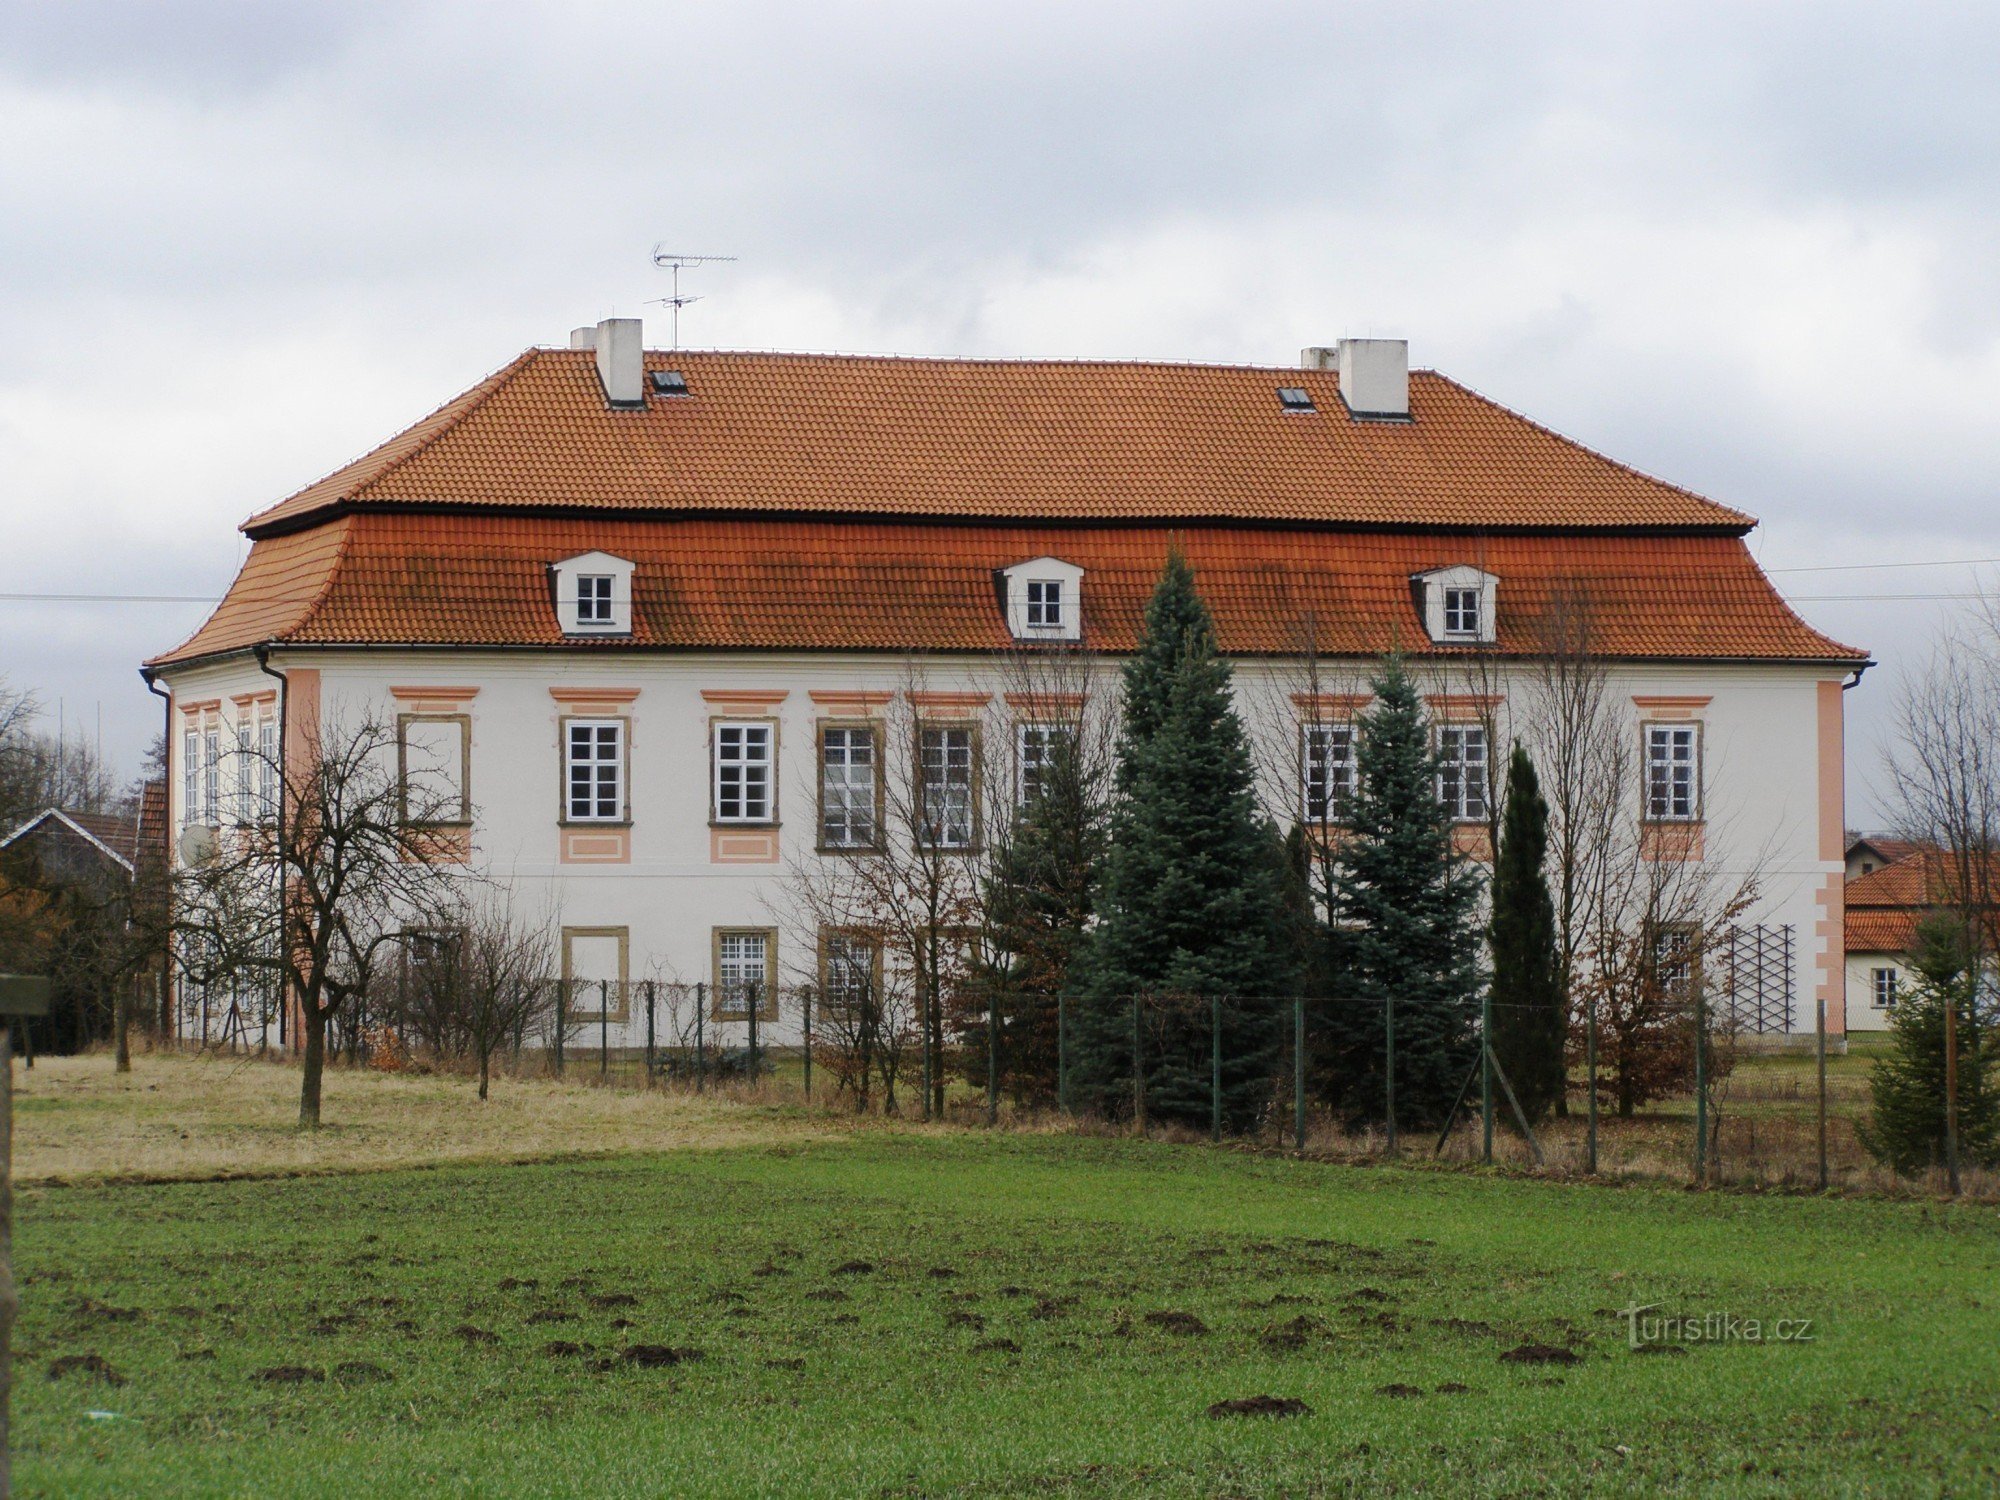 Sobčice - lâu đài